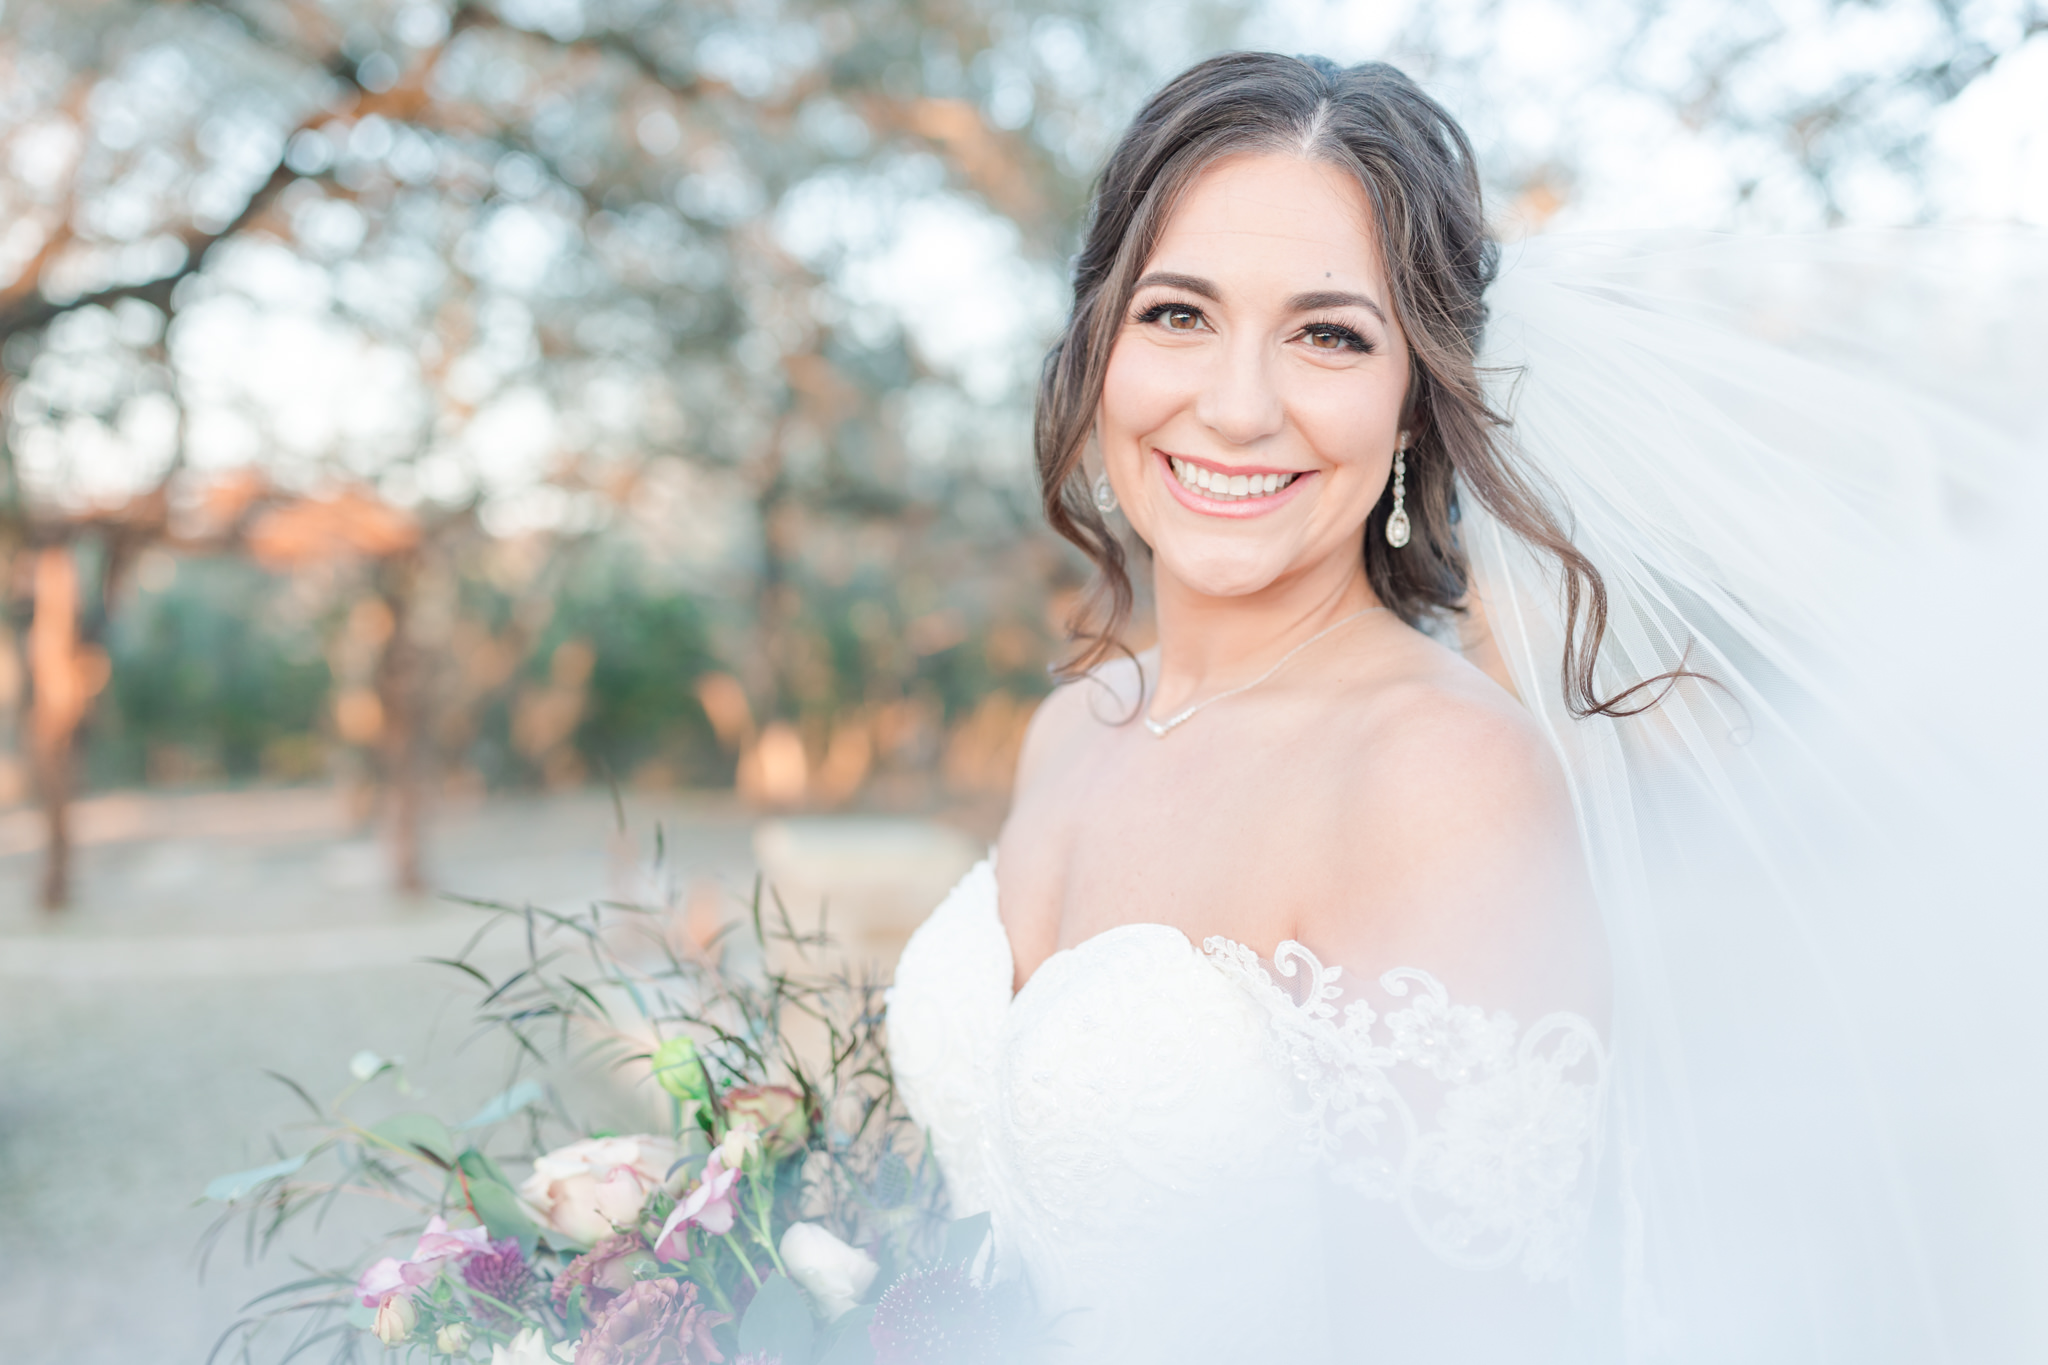 Bridal Session at Camp Lucy in Dripping Springs, TX by Dawn Elizabeth Studios, San Antonio Wedding Photographer